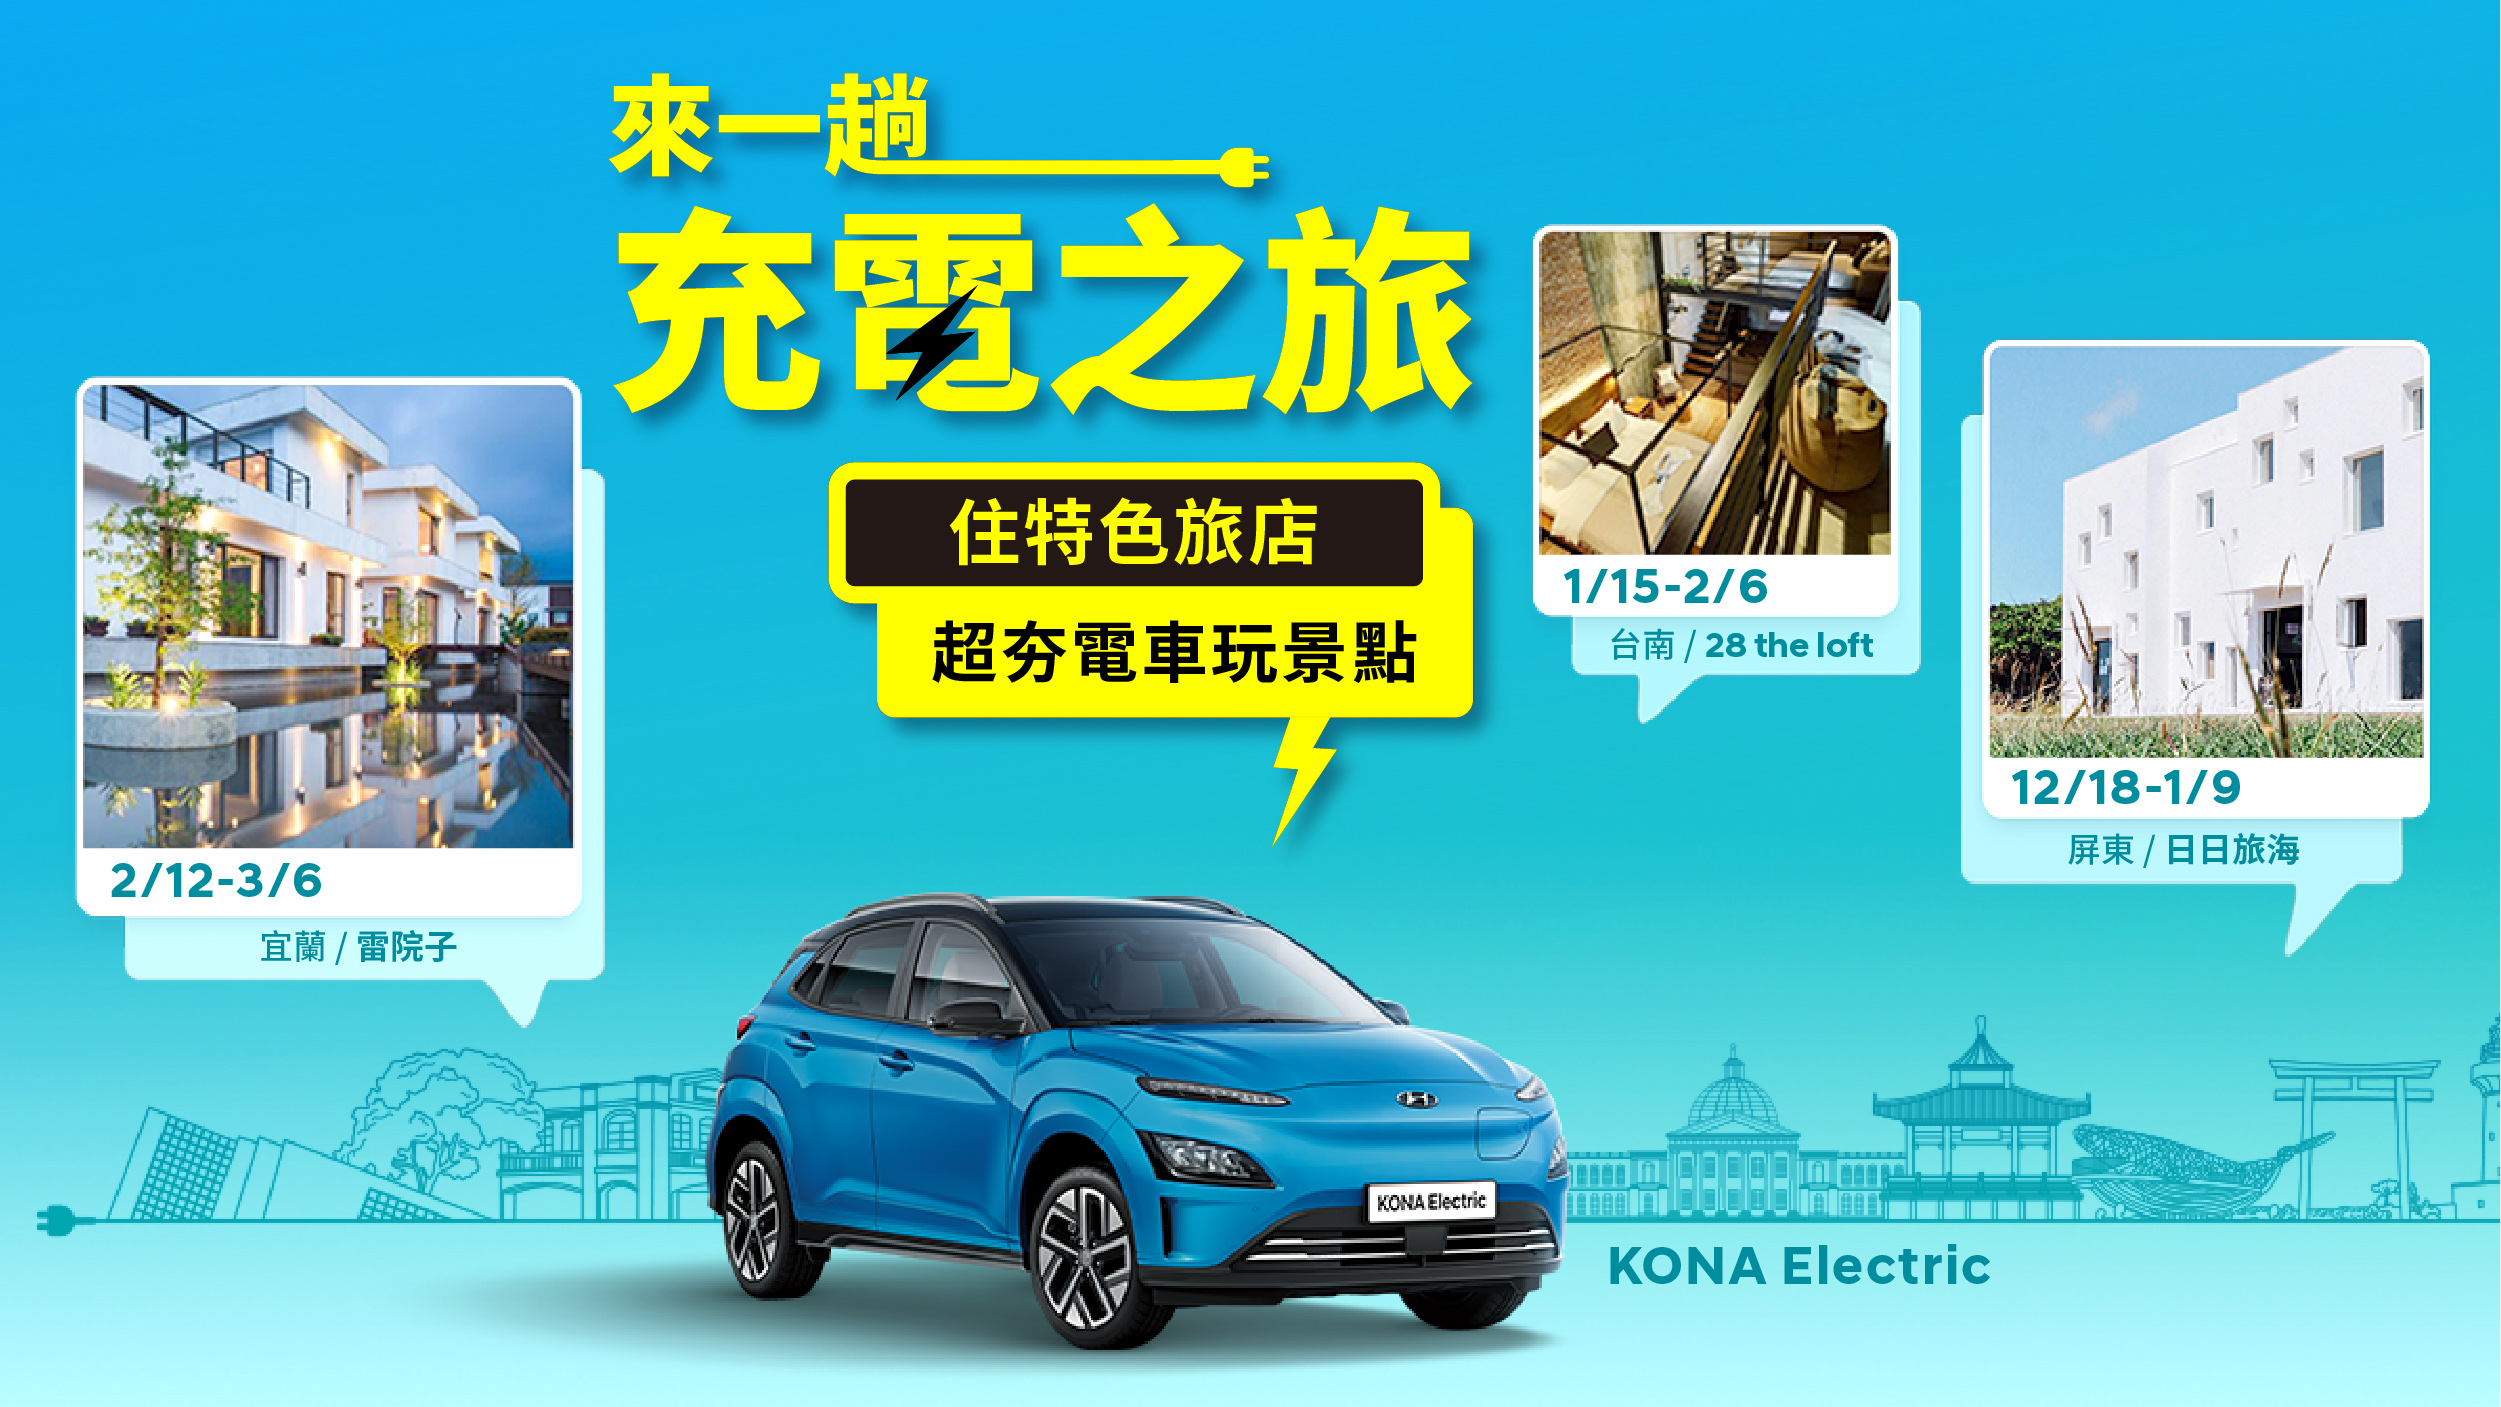 Hyundai 推入住特色旅店專案 再送 Kona Electric 試駕